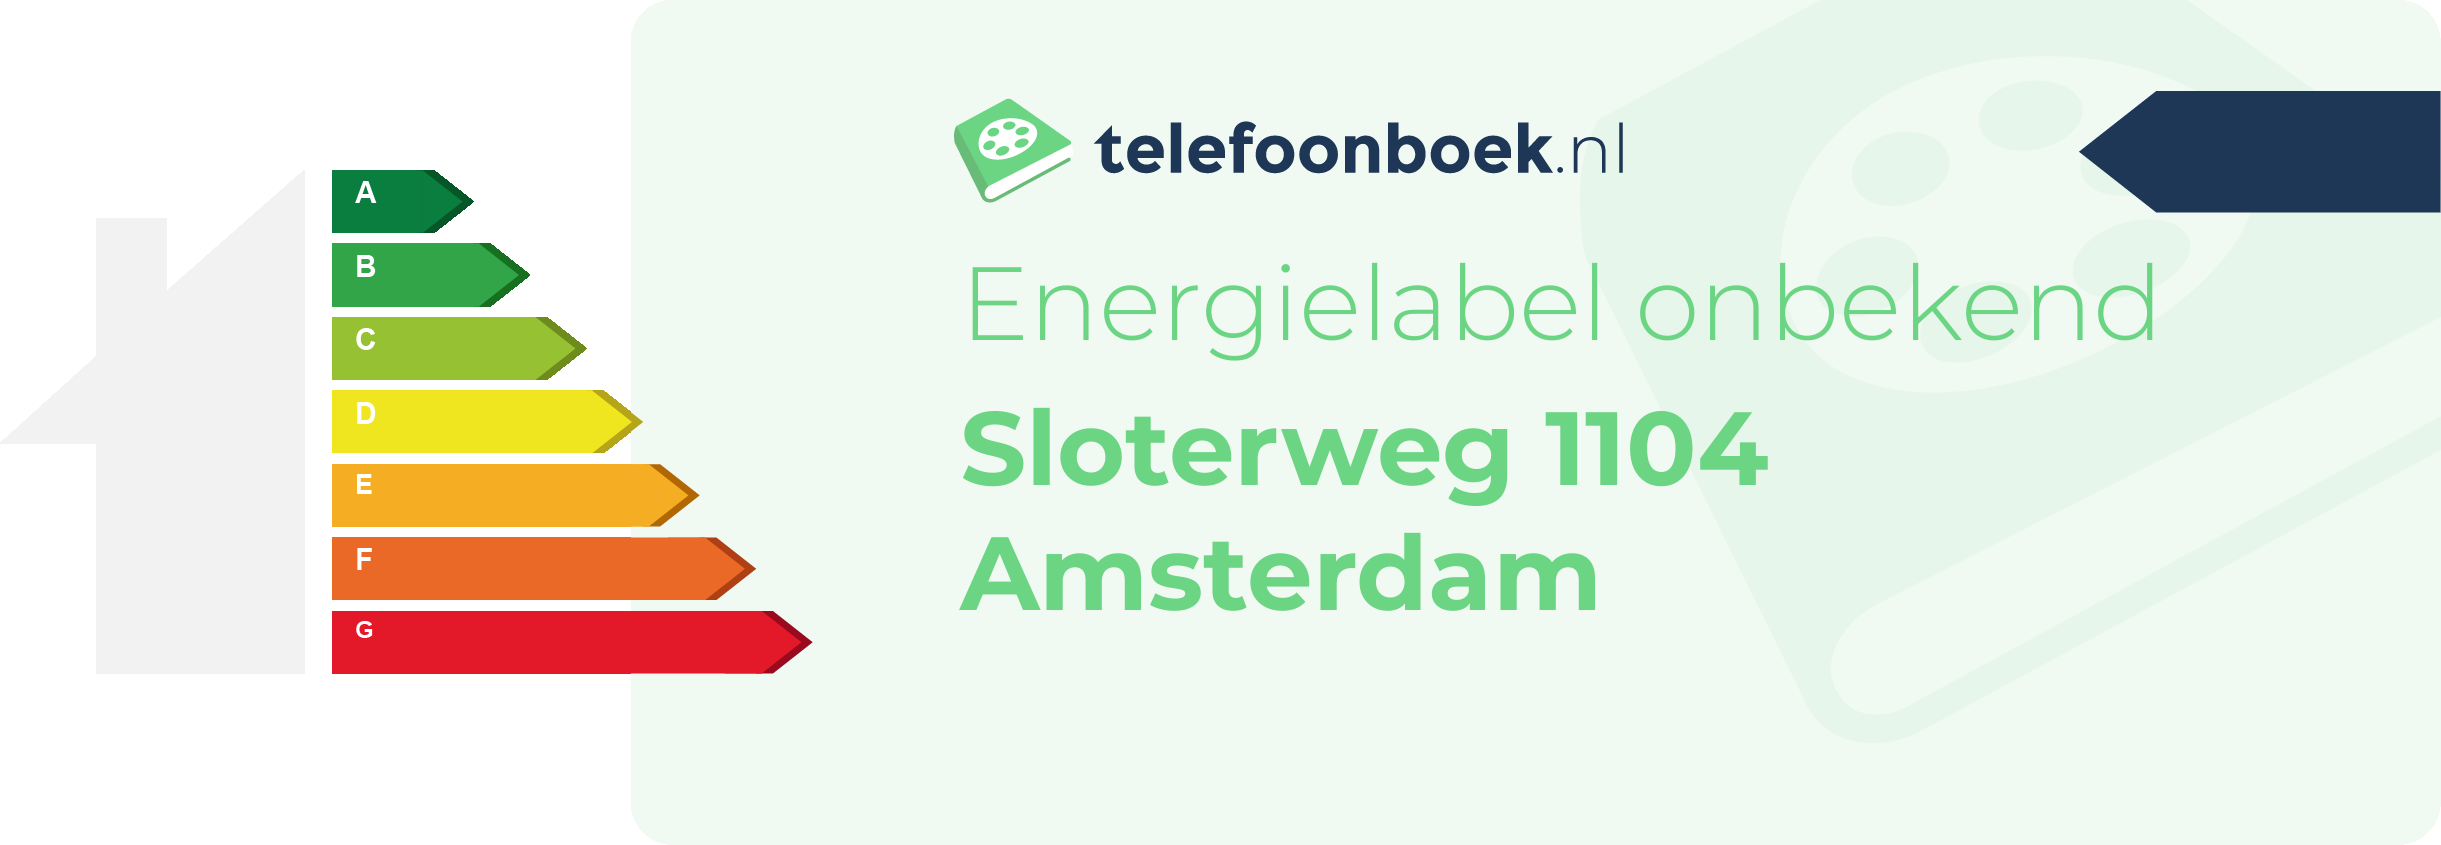 Energielabel Sloterweg 1104 Amsterdam